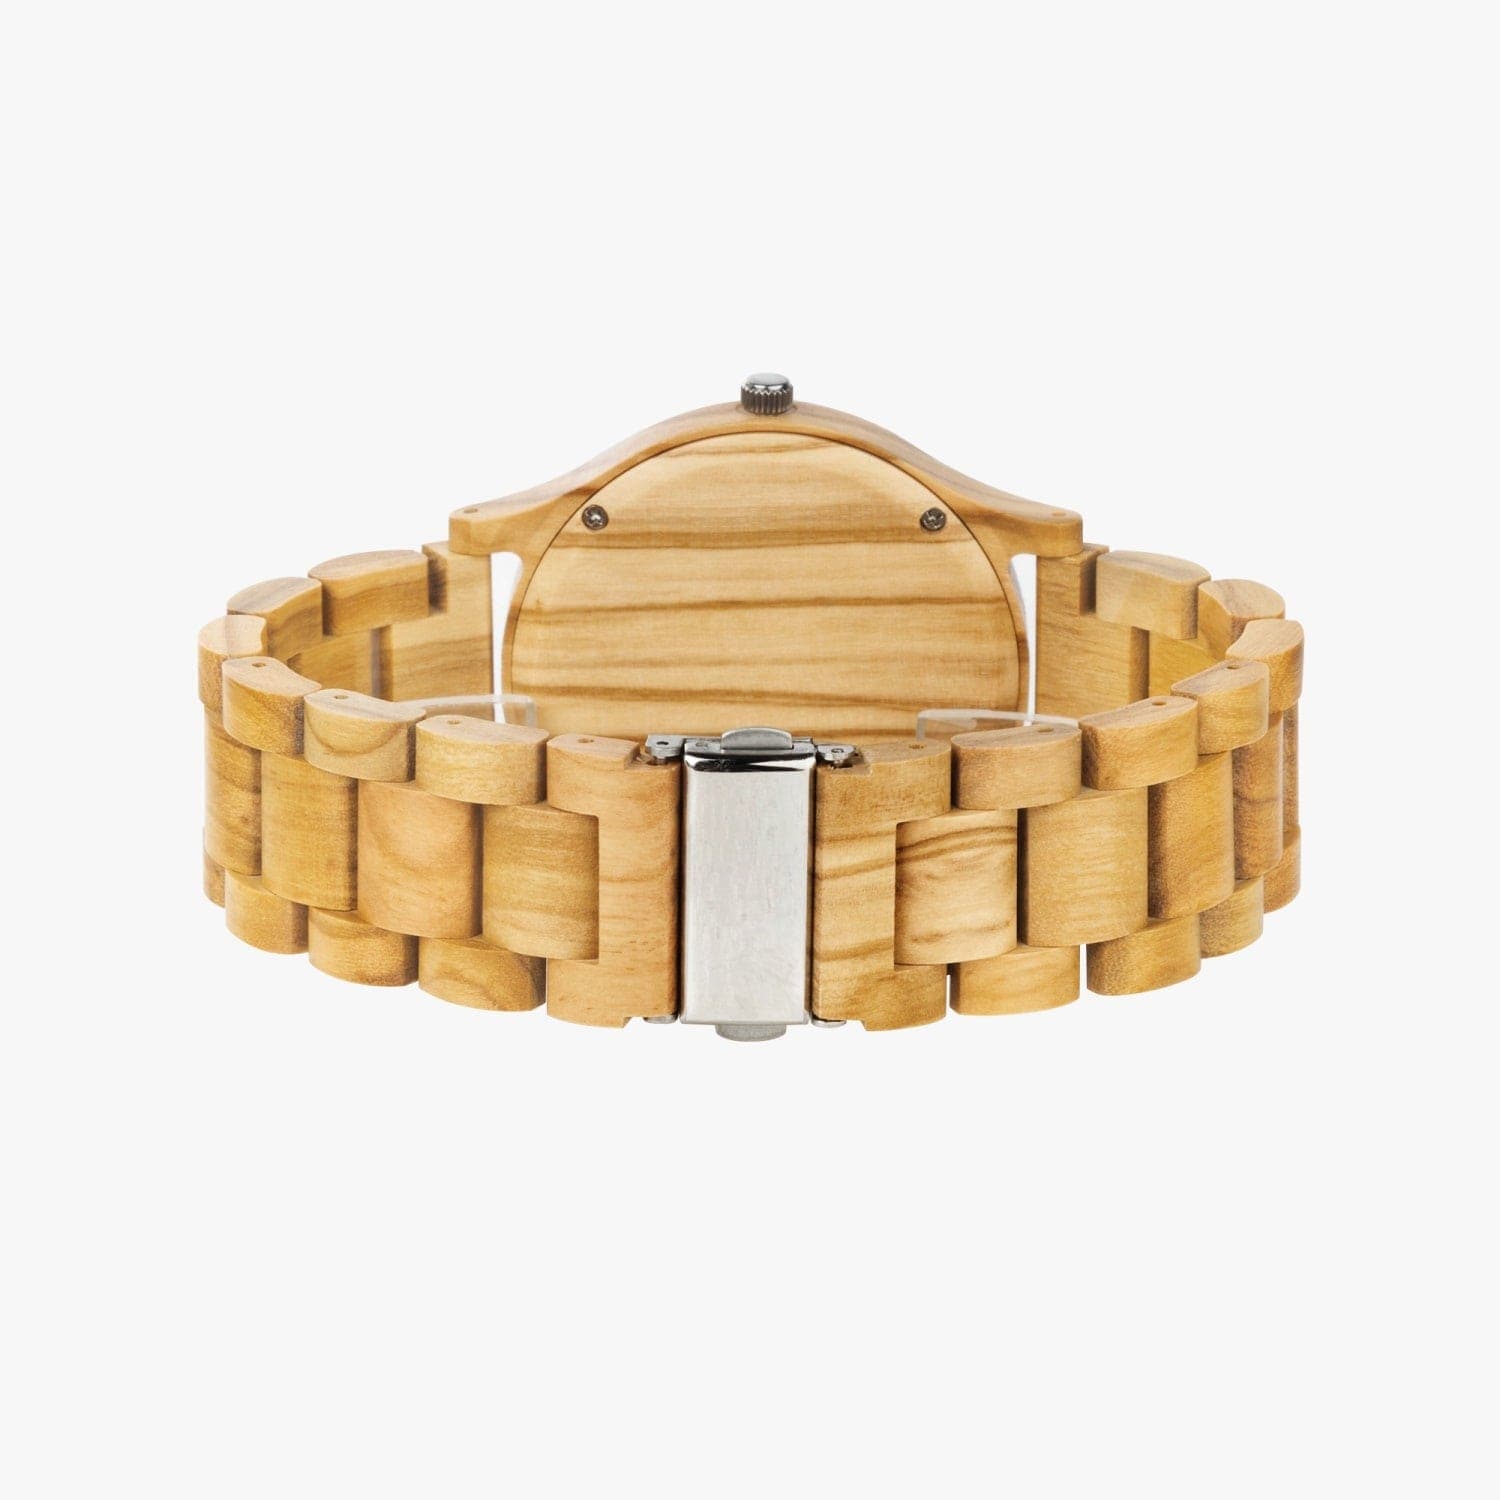 Venus, Italian Olive Lumber Wooden Watch, designed by Sensus Studio